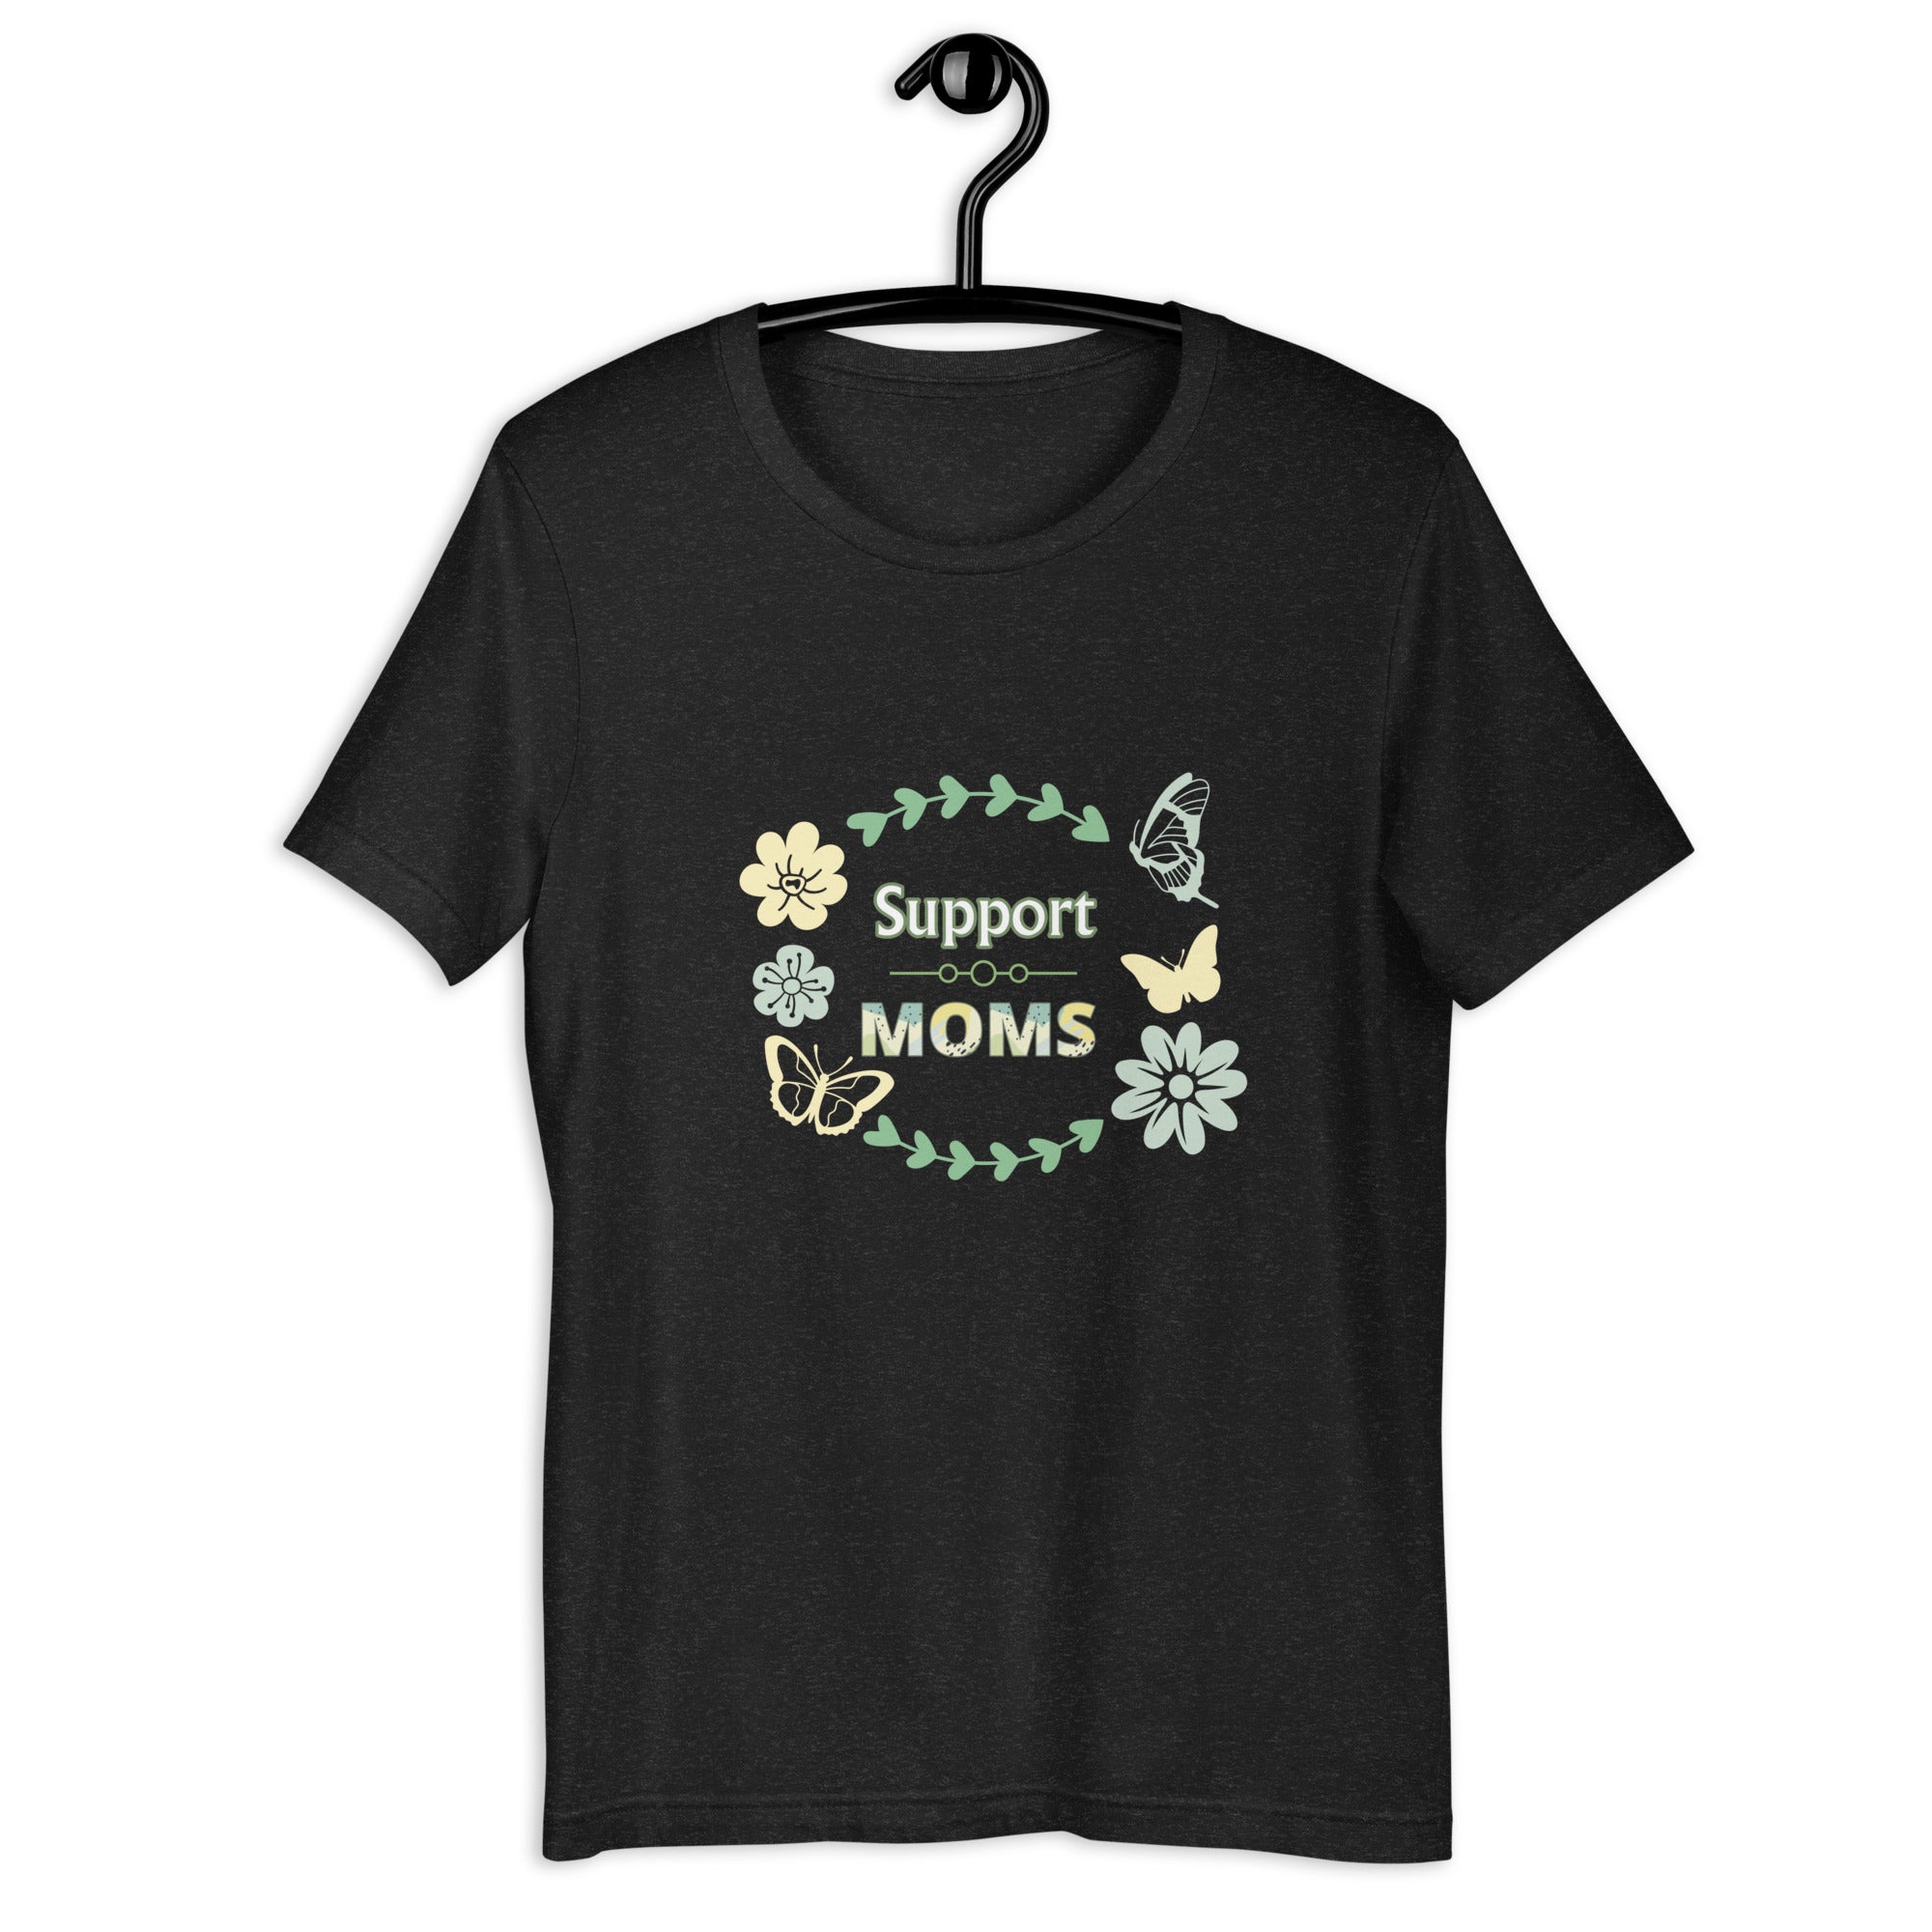 SUPPORT MOMS t-shirt